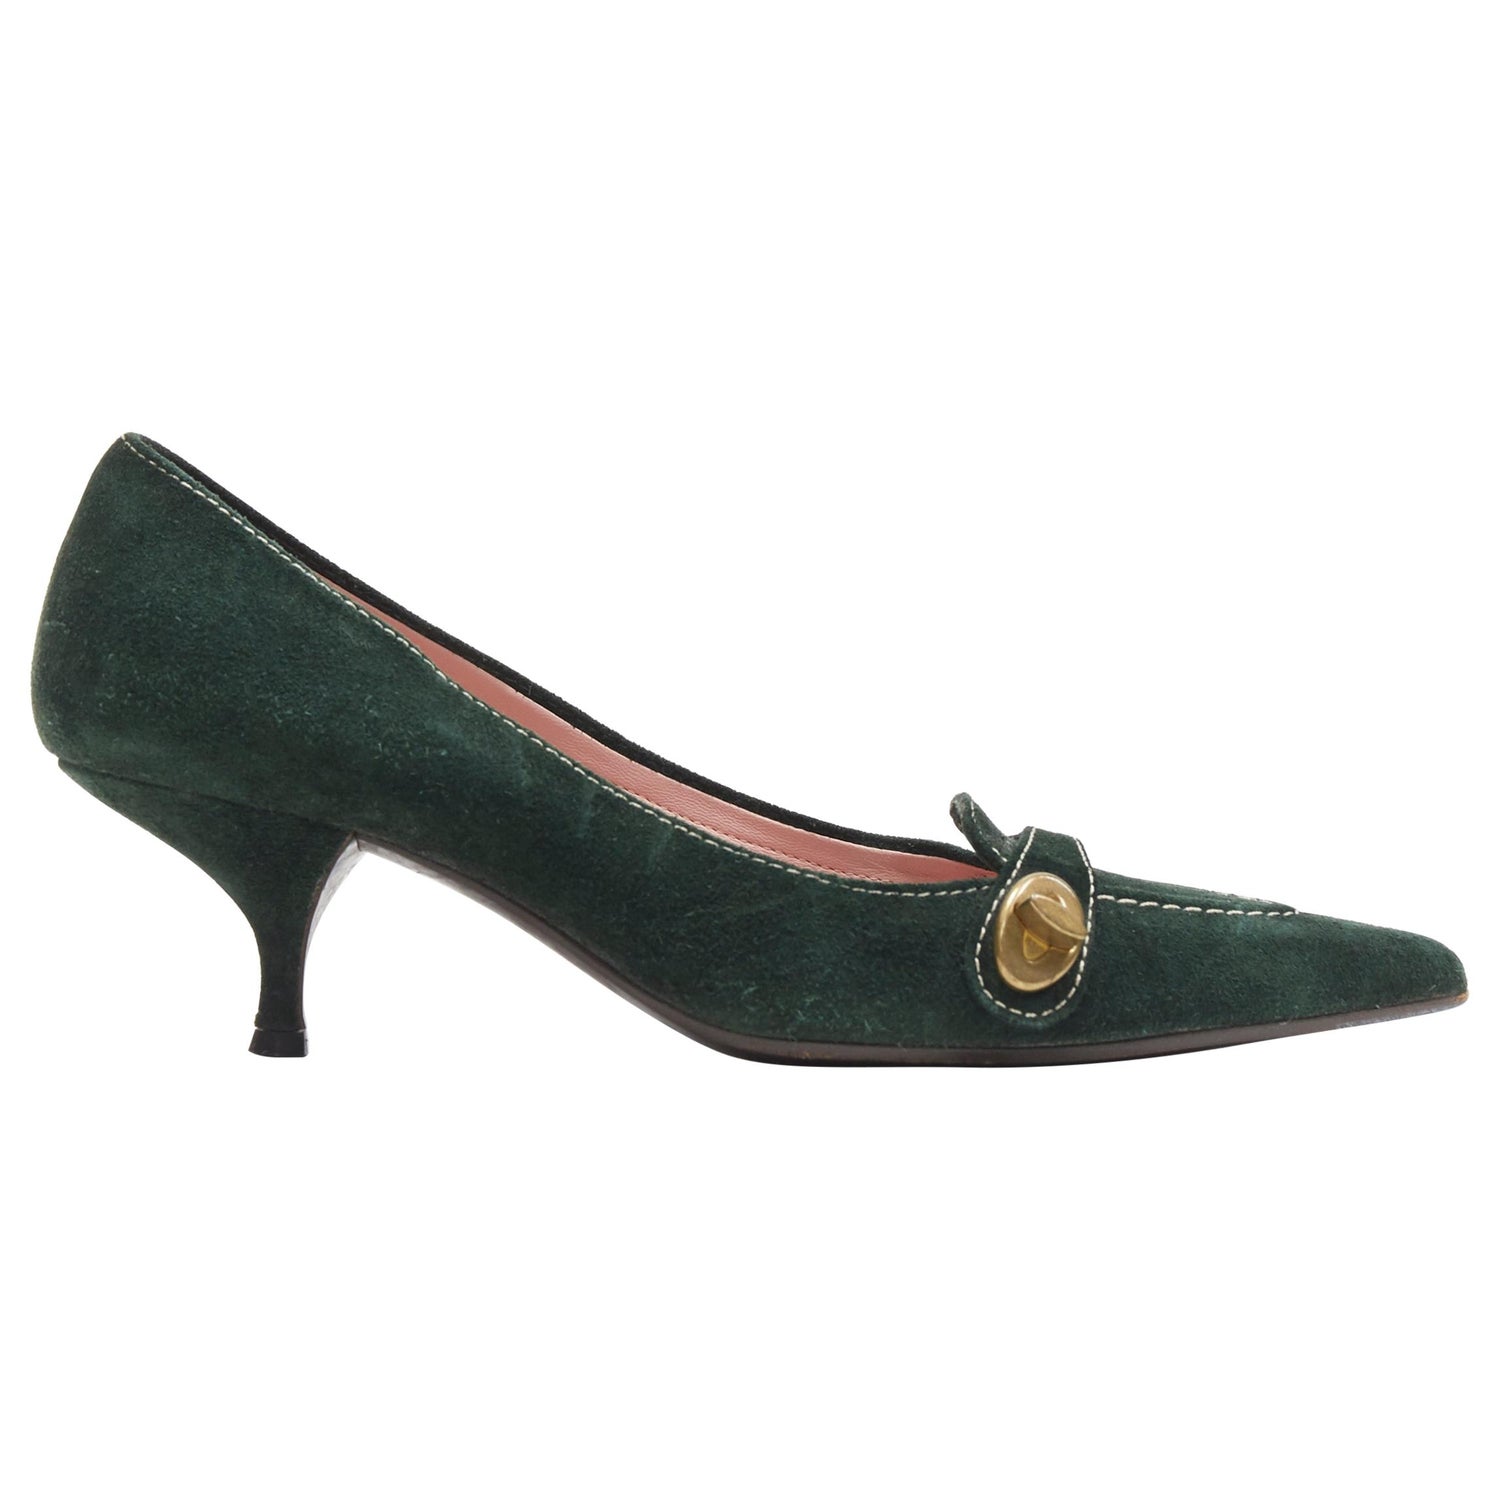 Green Kitten Heels - 3 For Sale on 1stDibs